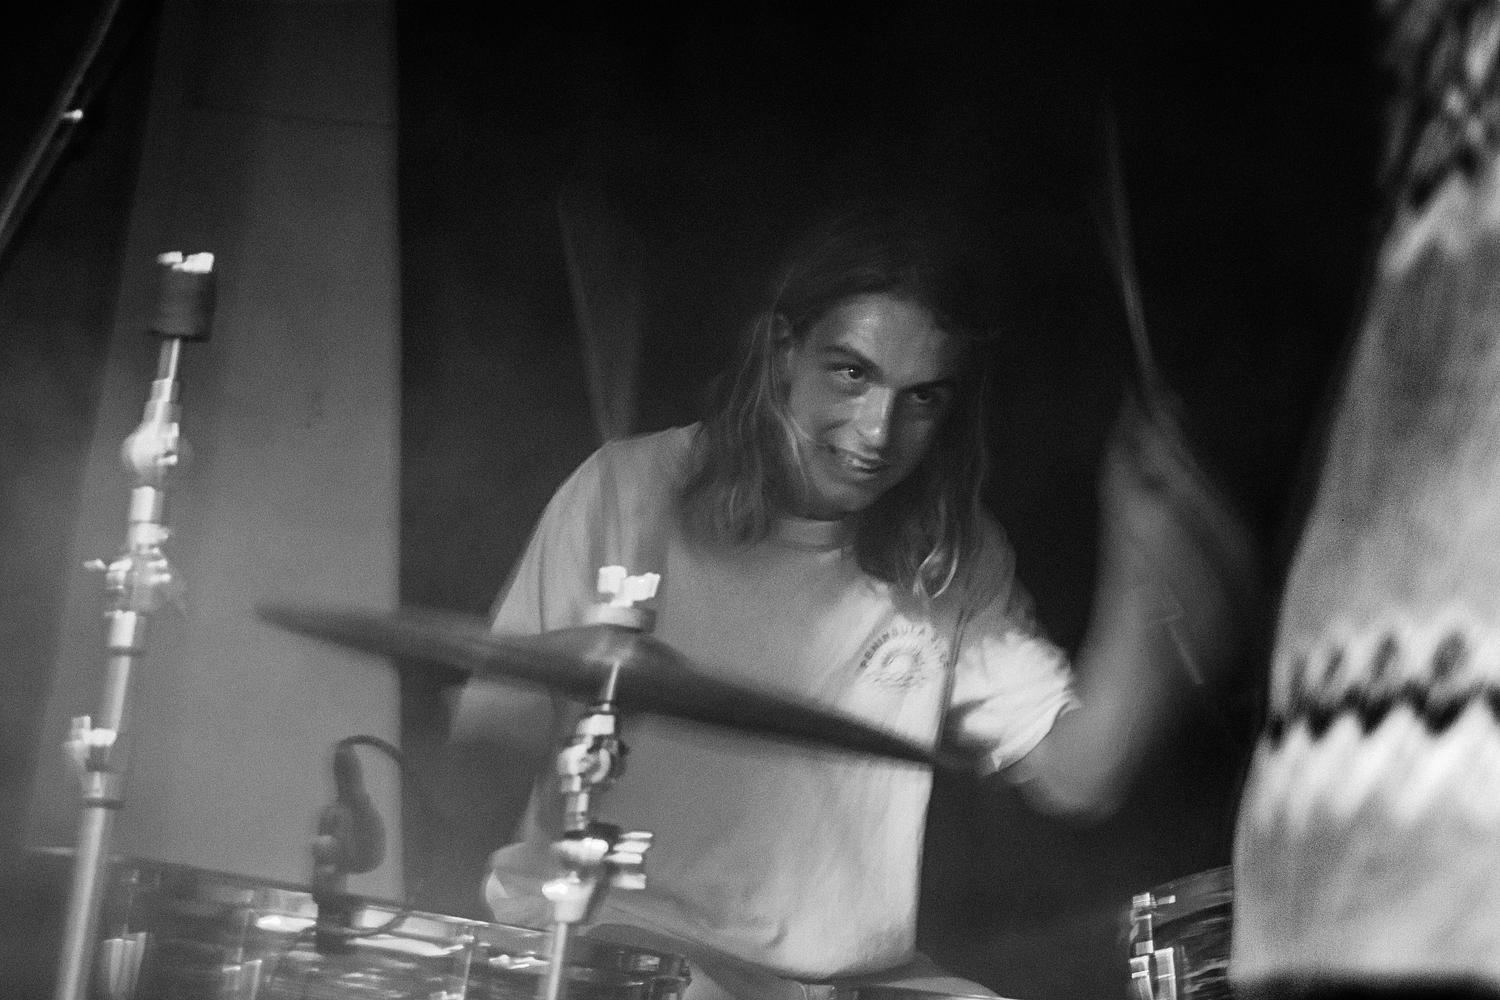 Ethan drumming at Torquay Hotel